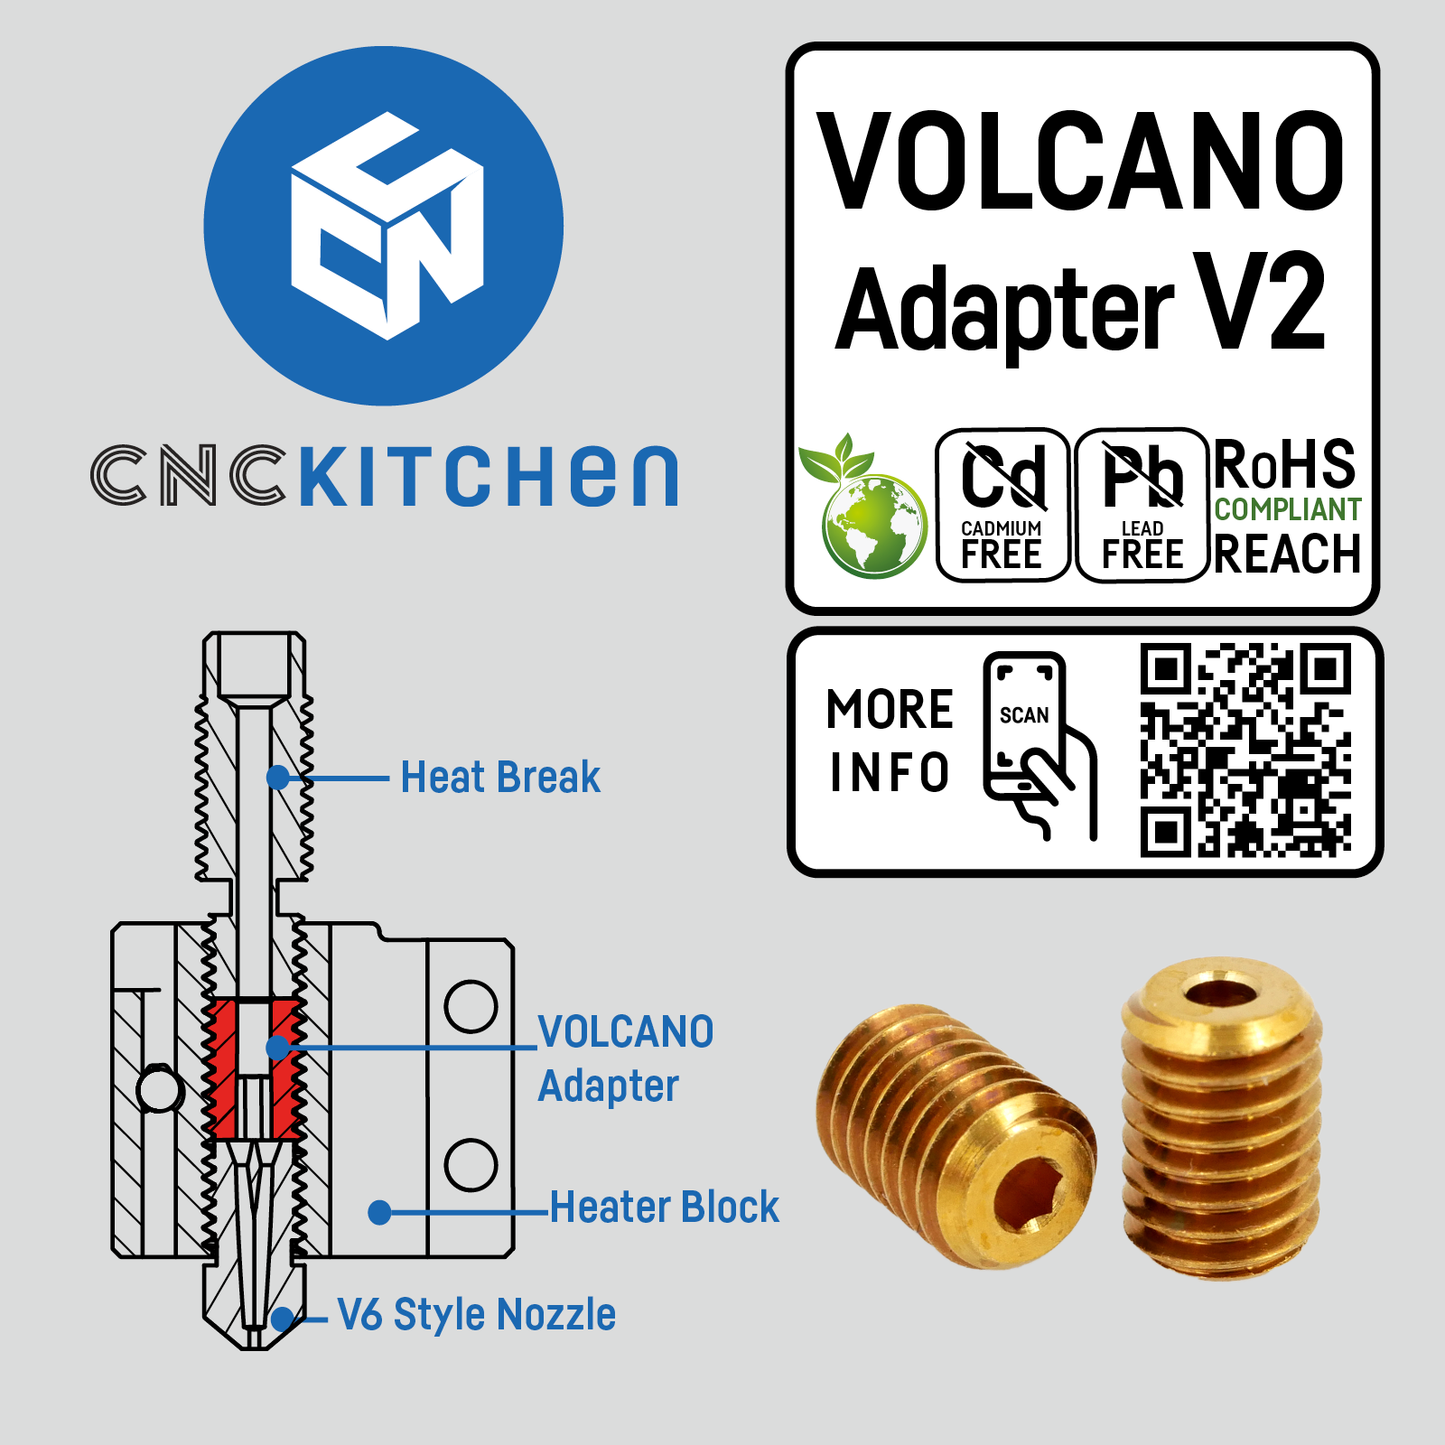 CNC Kitchen Volcano M6 Nozzle Adapter